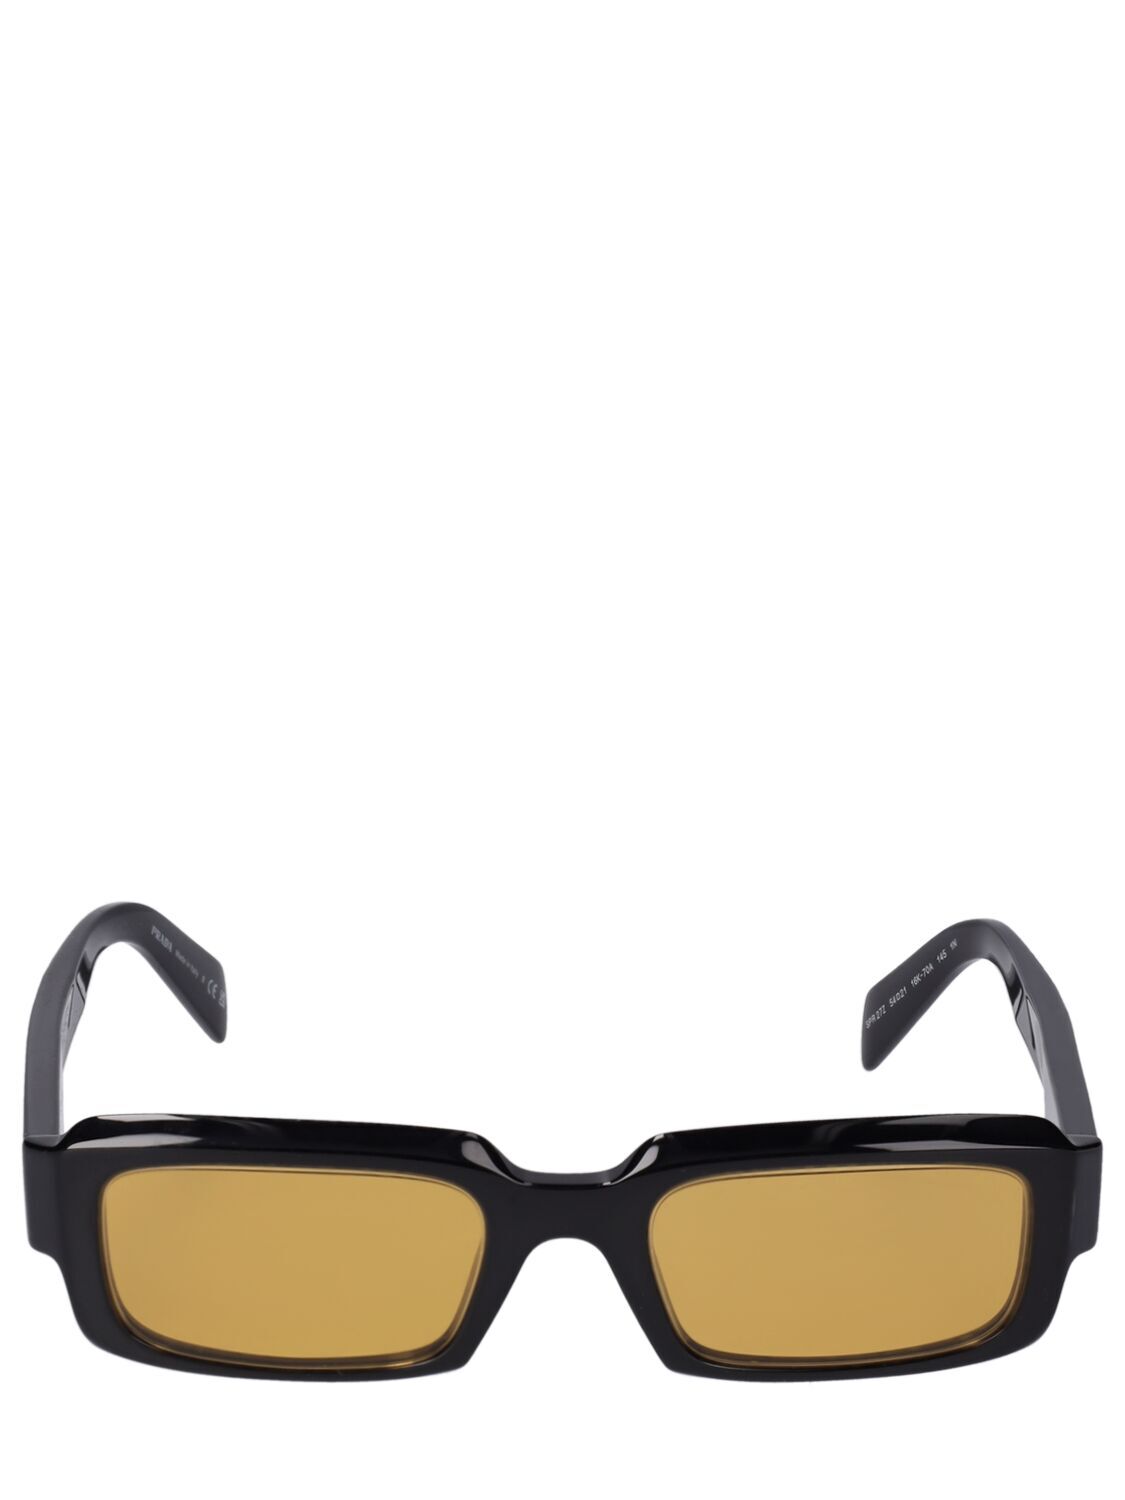 PRADA Catwalk Squared Acetate Sunglasses in black / yellow